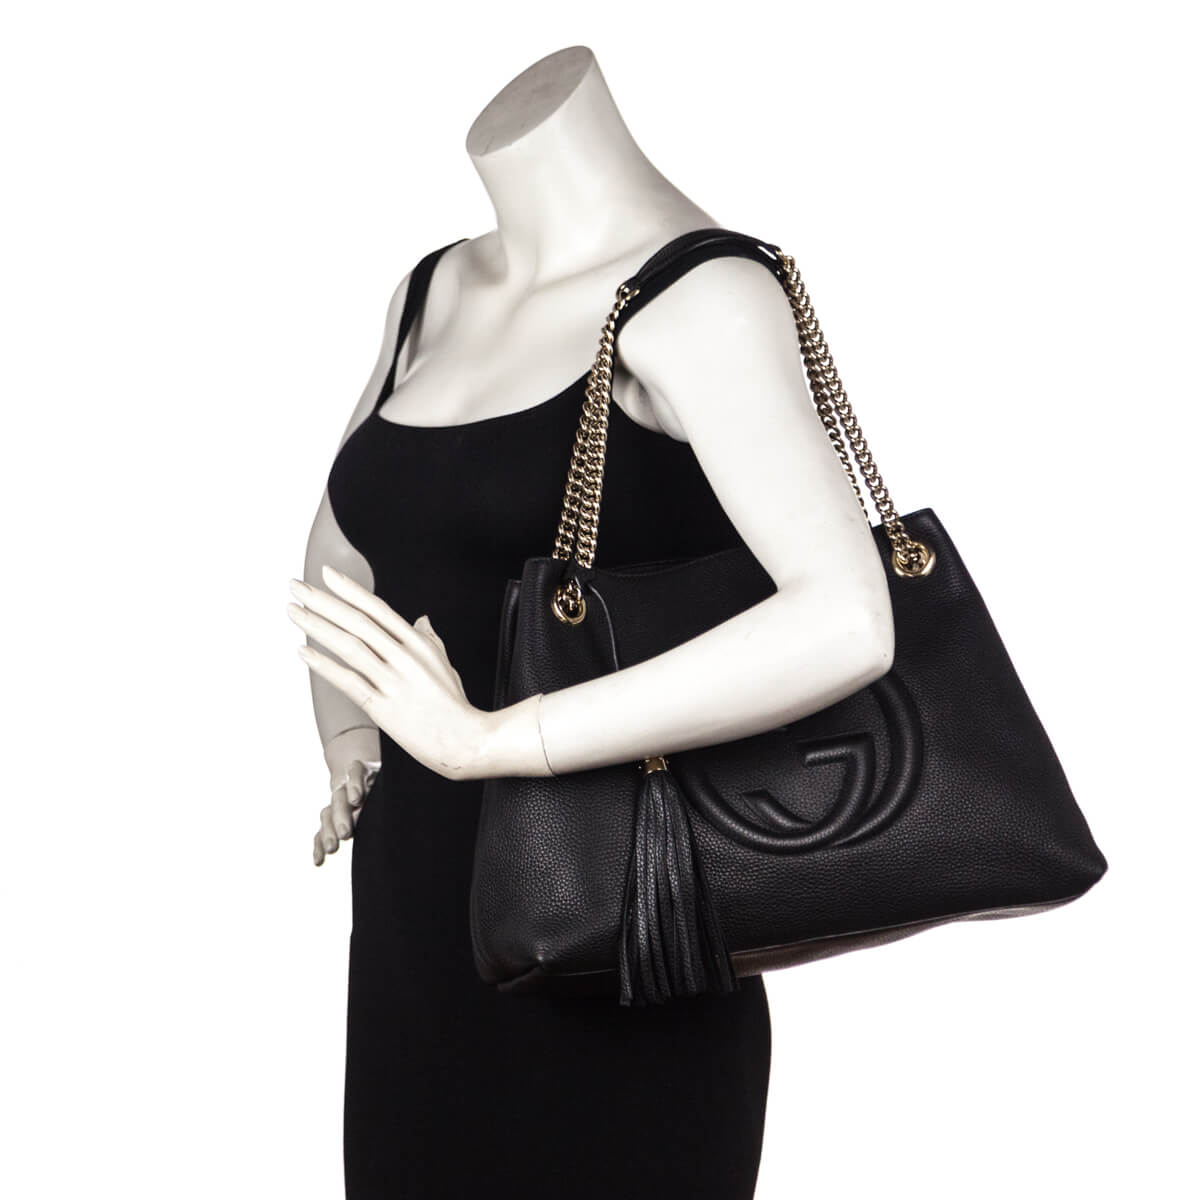 Gucci Black Leather Medium Soho Chain Shoulder Bag - Preowned Gucci